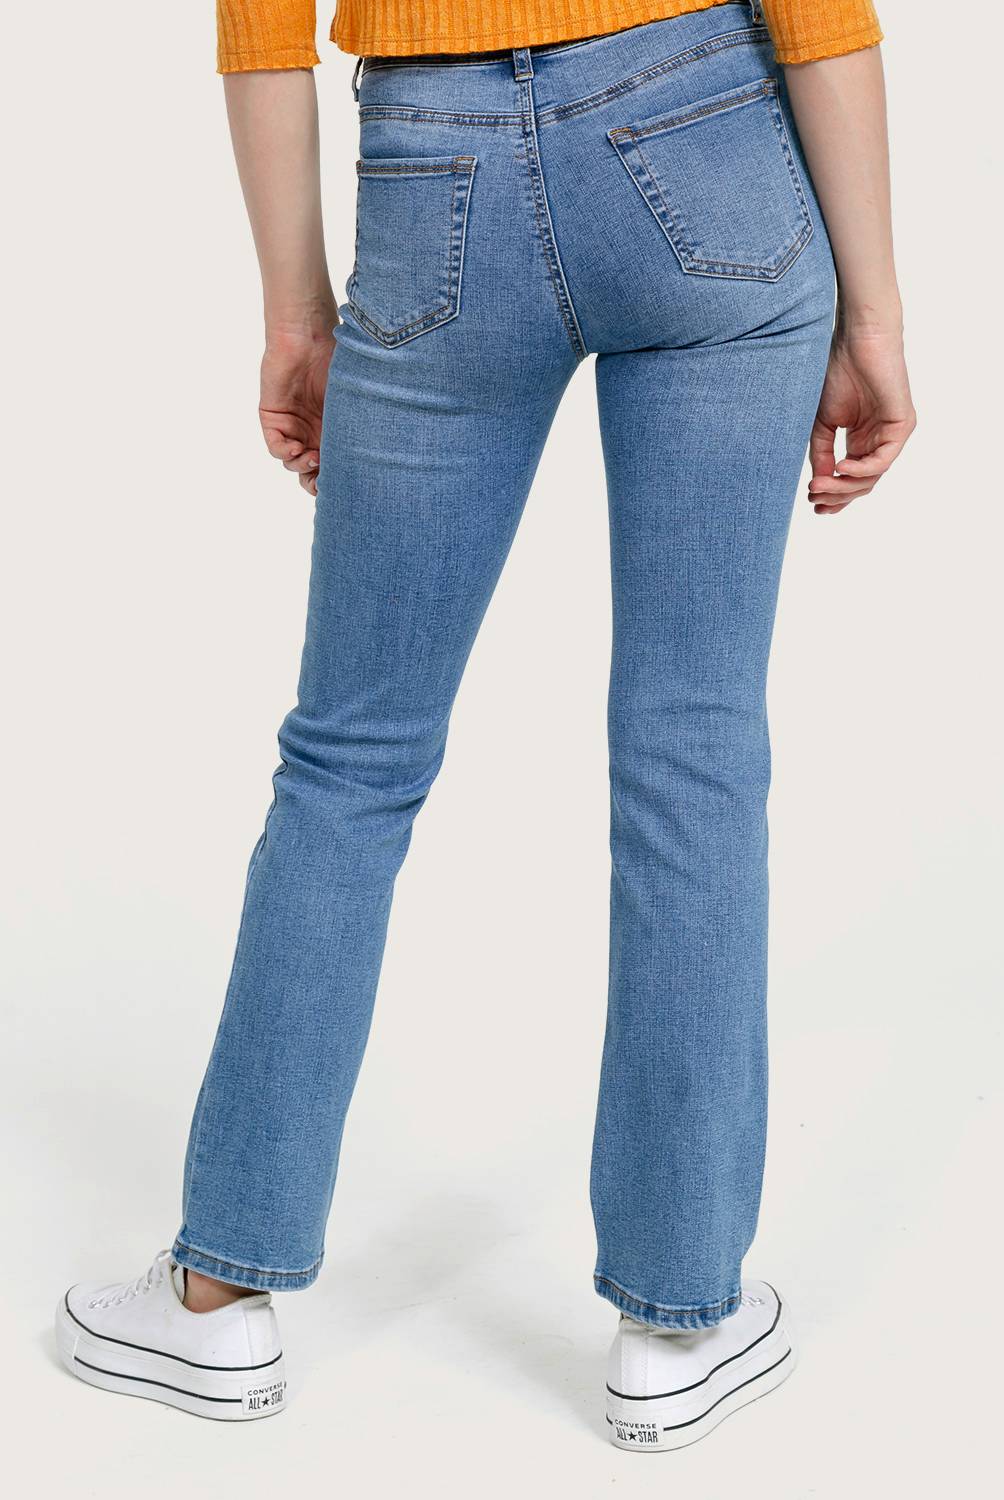 SYBILLA - Sybilla Jeans Straight Tiro Alto Denim Mujer